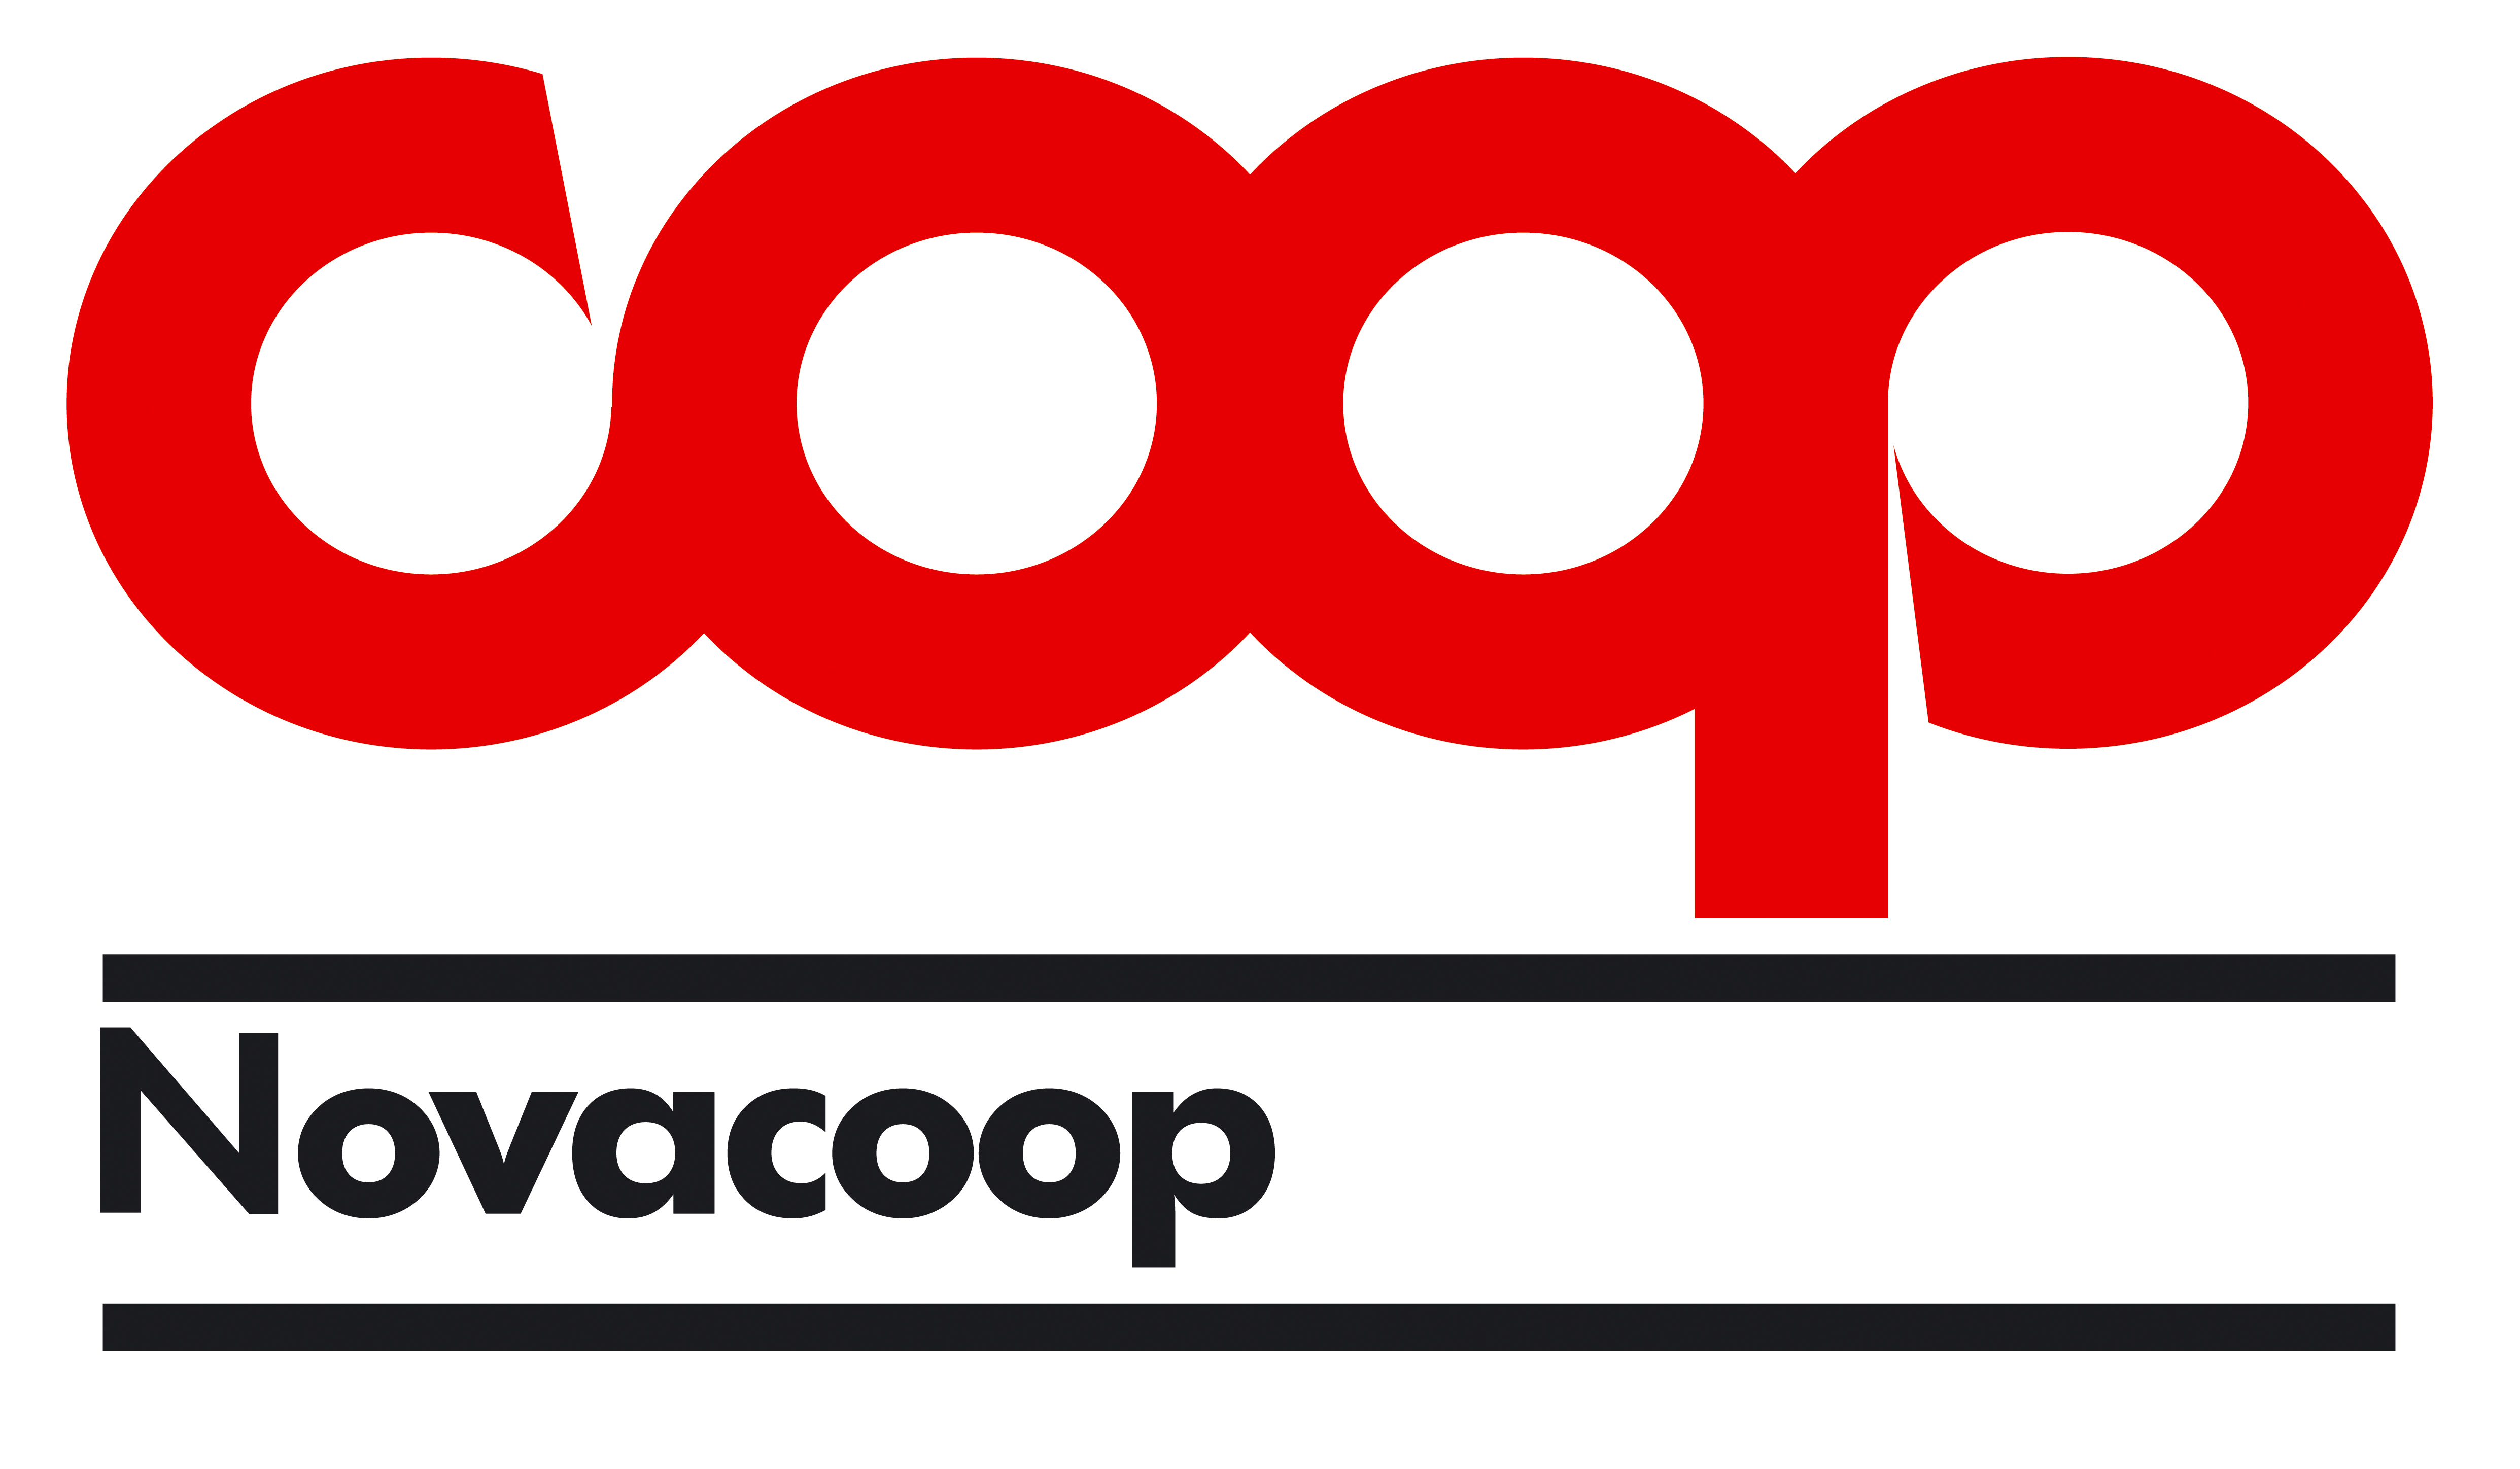 Logo Nova Coop corretto